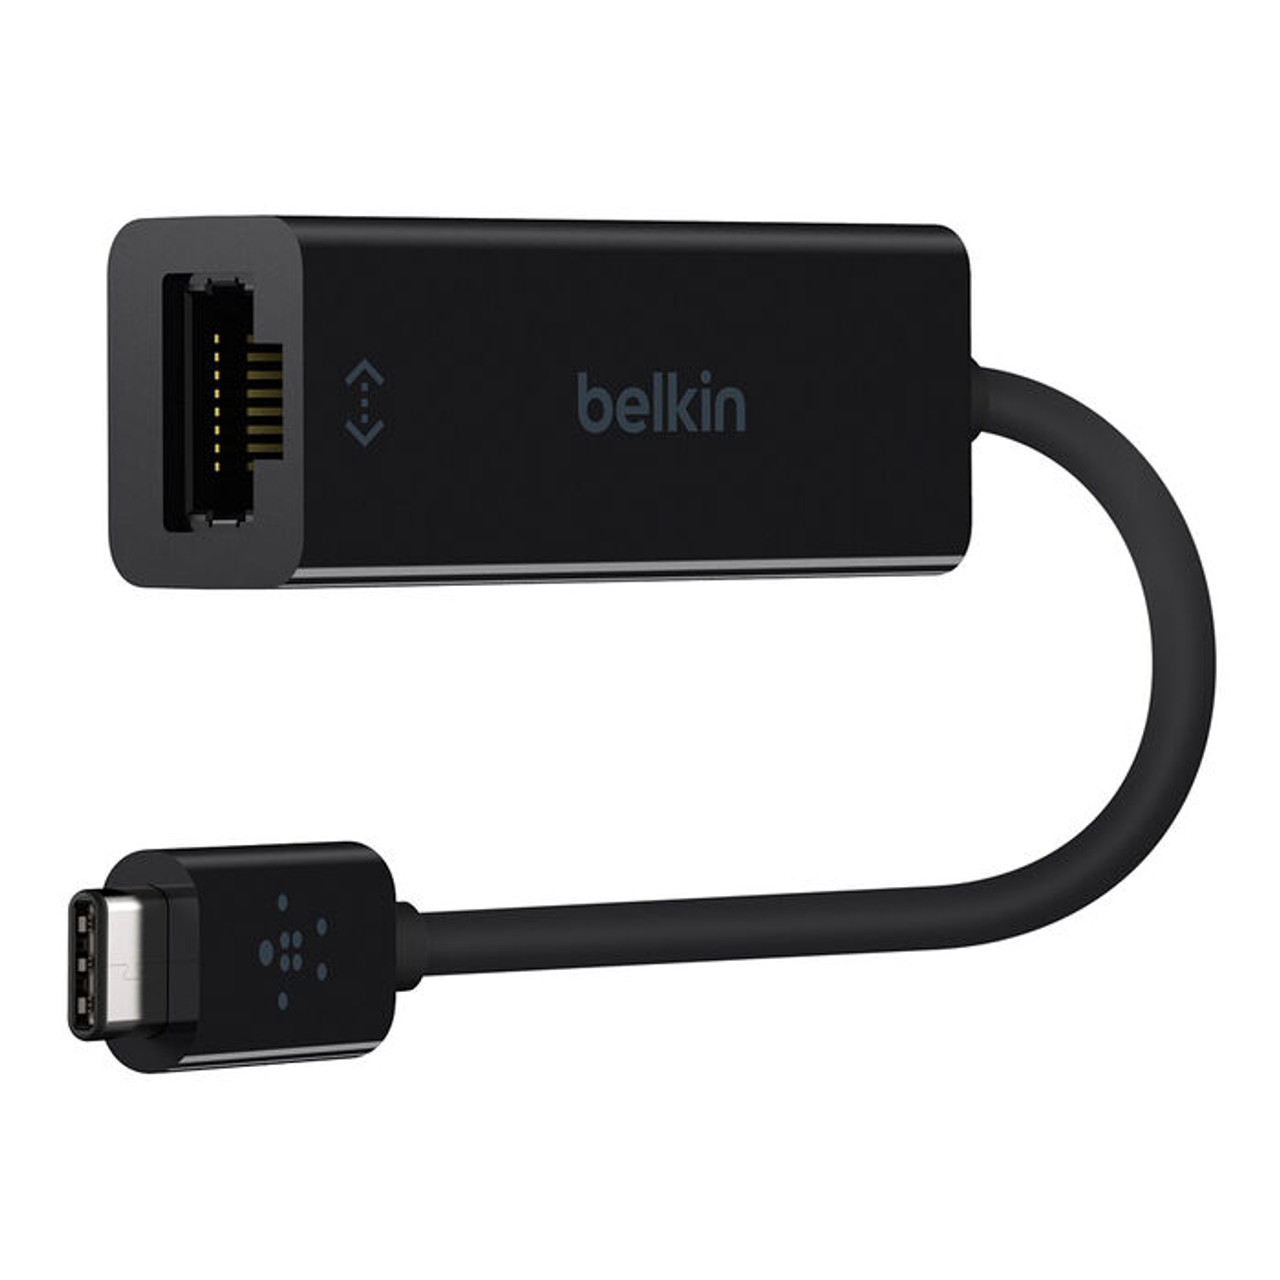 Belkin USB-C to Gigabit Ethernet Adapter BLACK, 78011843, AYOUB COMPUTERS